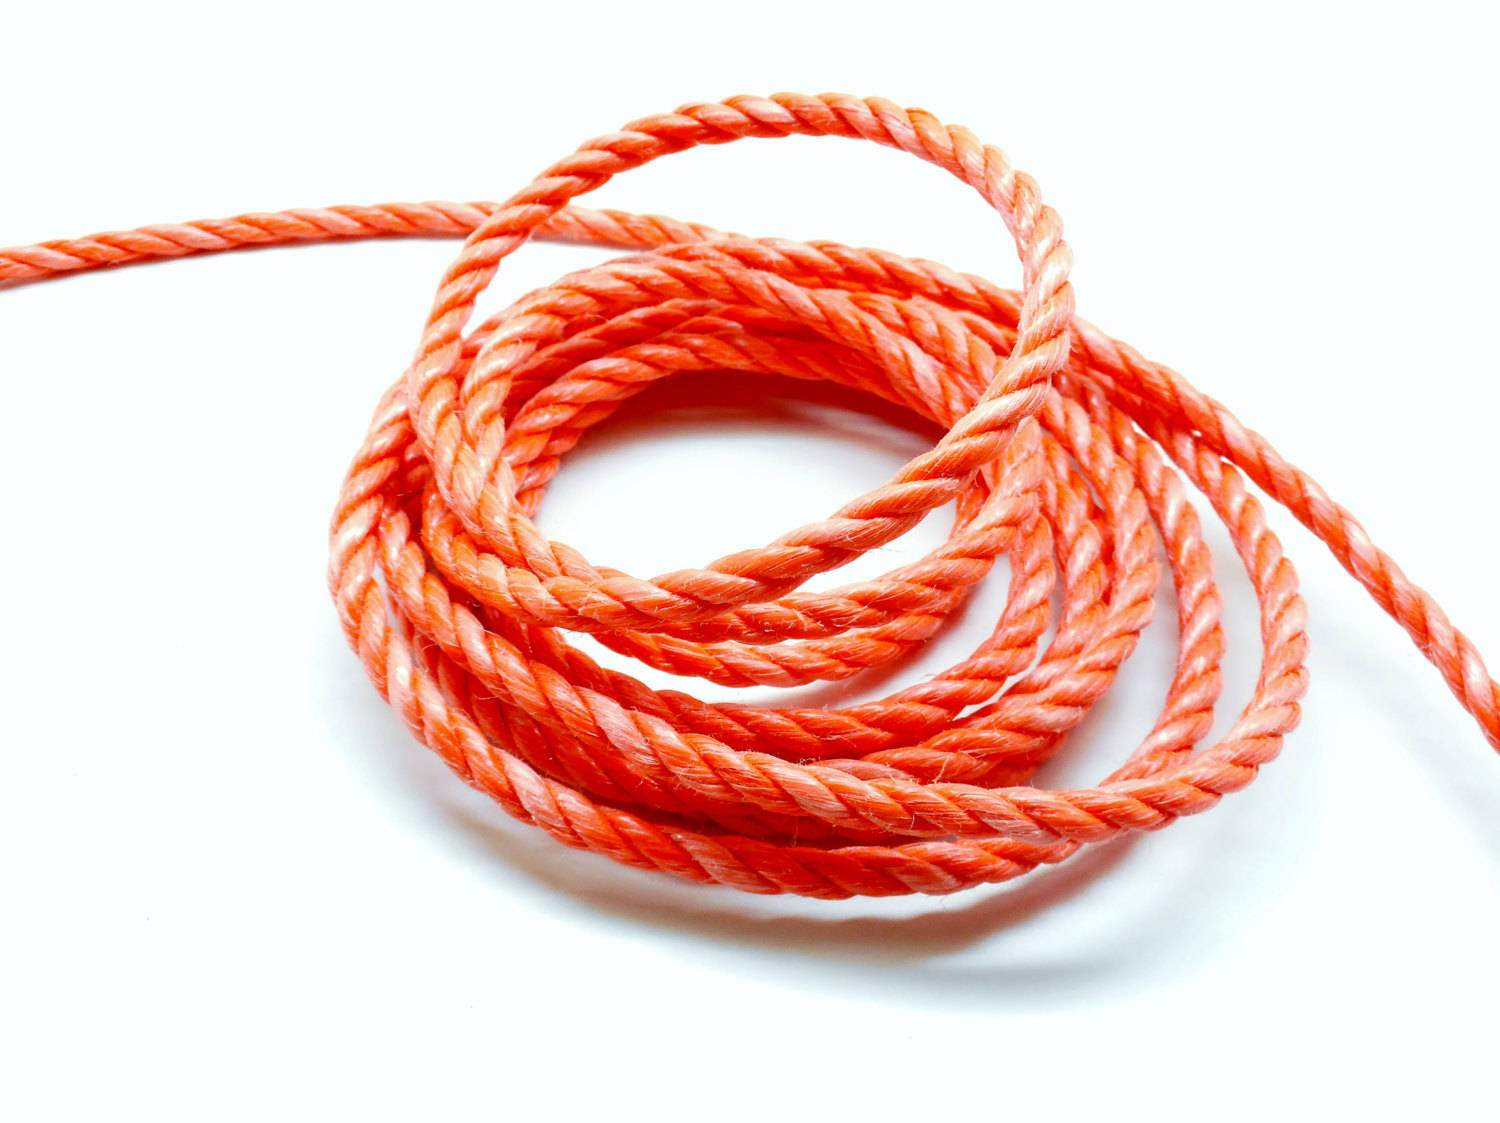 Lot de 2 mètres de corde nylon 3 brins orange 6 mm -  France